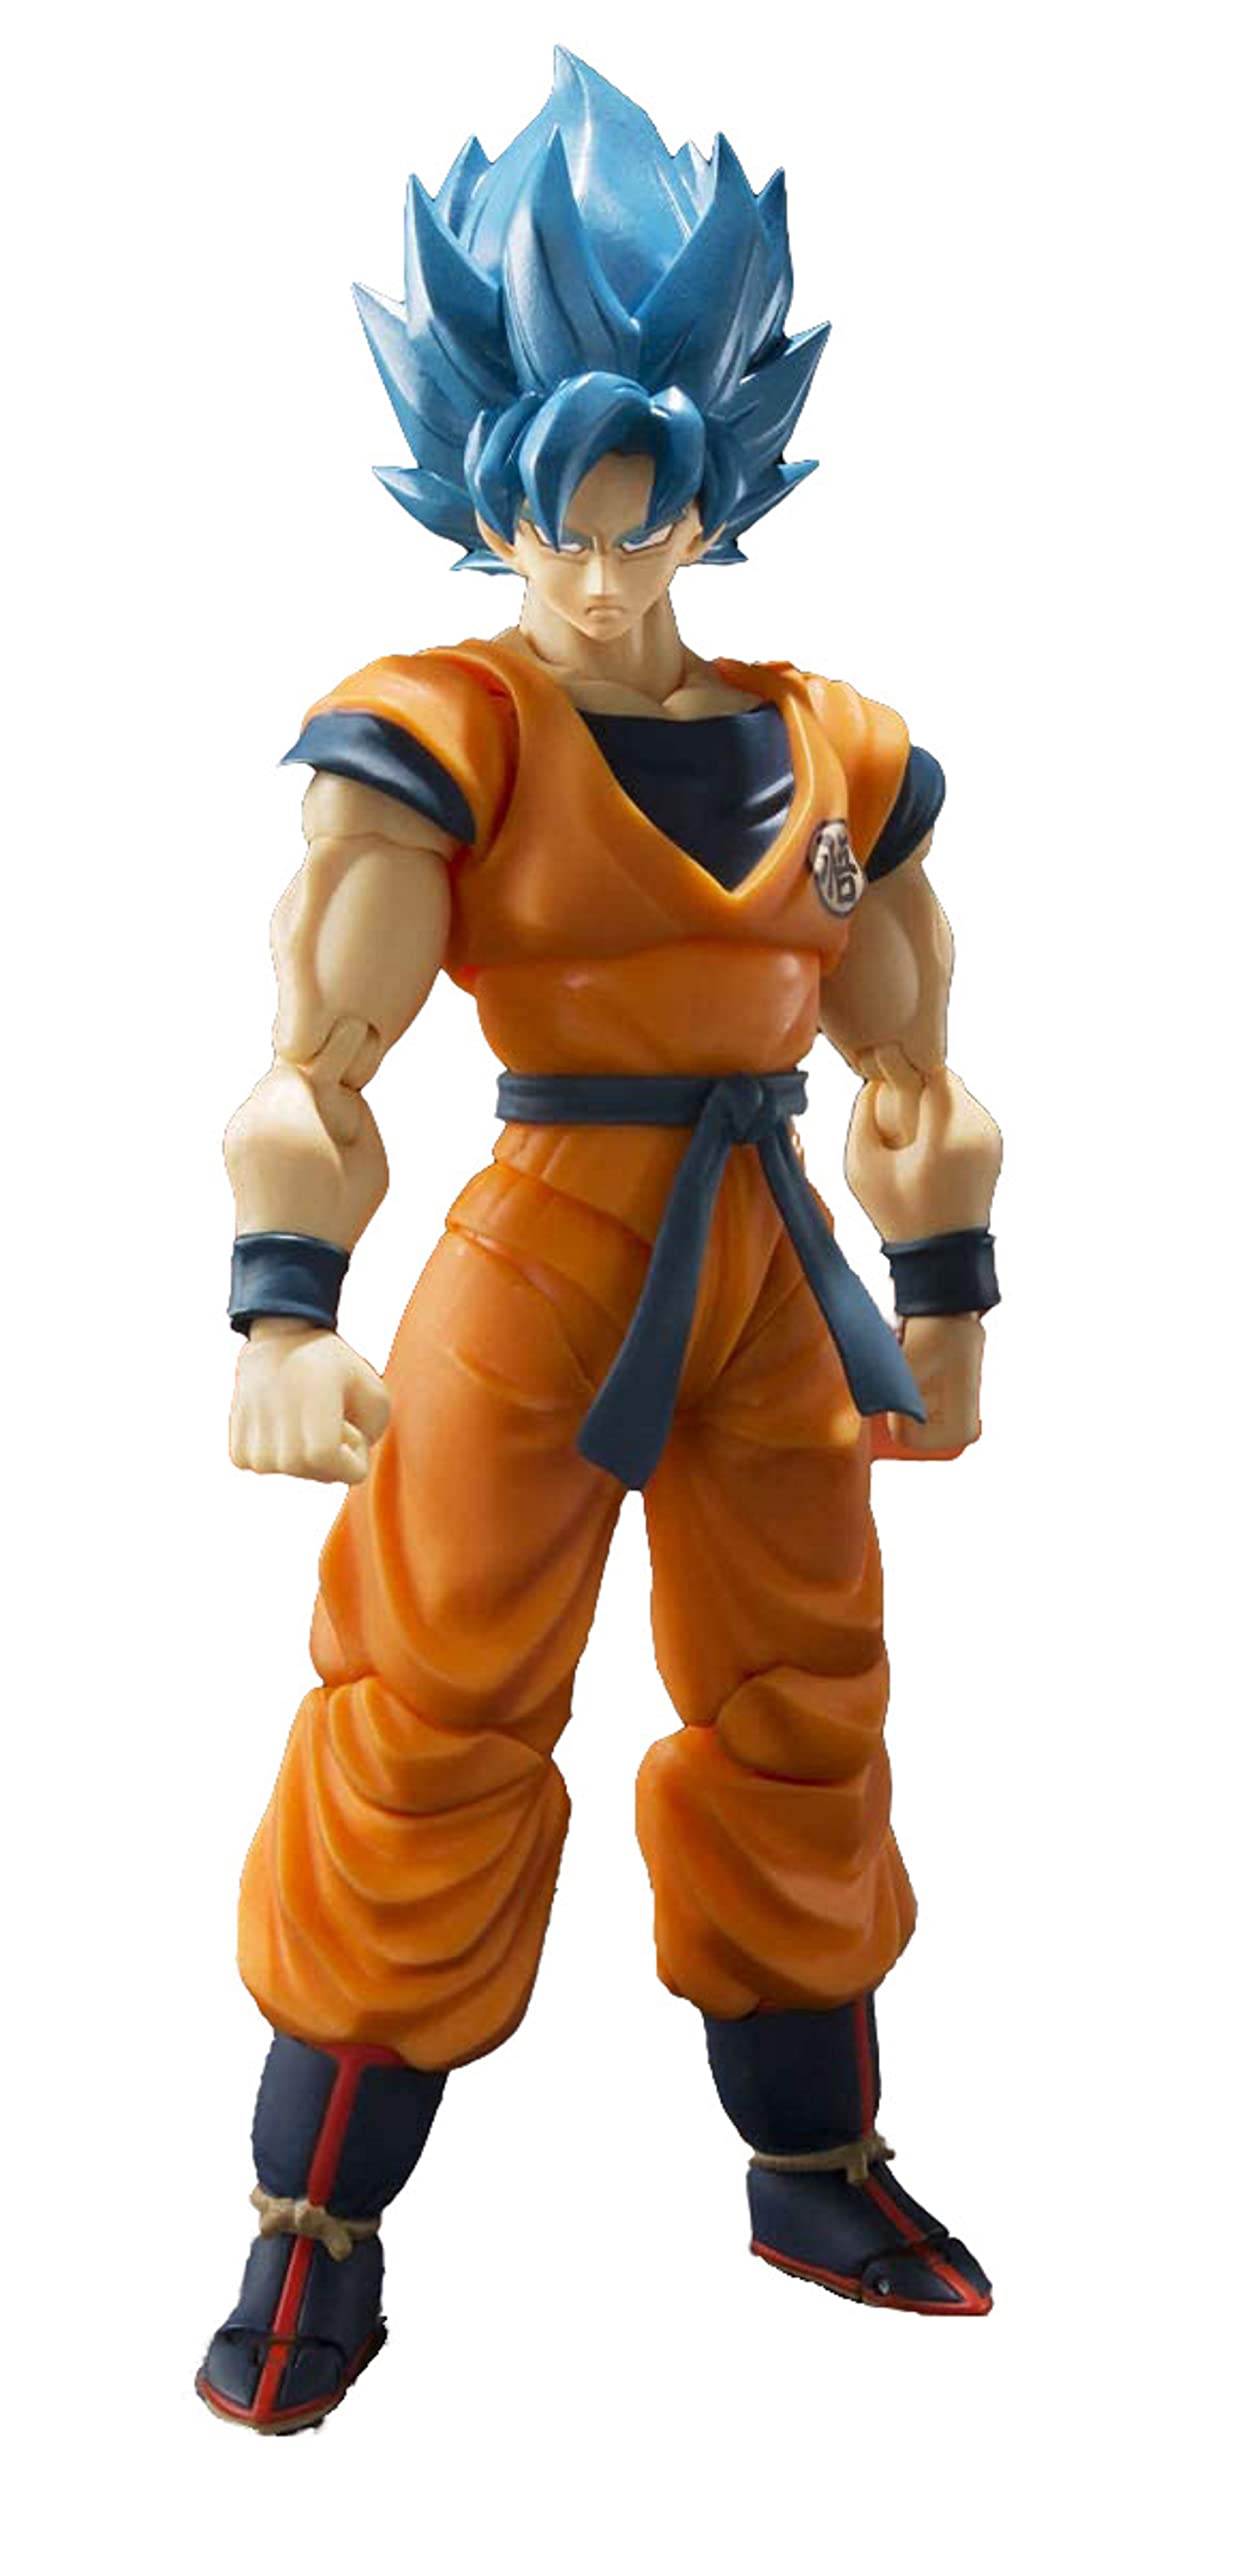 TAMASHII NATIONS Bandai S.H. Figuarts Super Saiyan God Goku Dragon Ball Super: Broly Action Figure